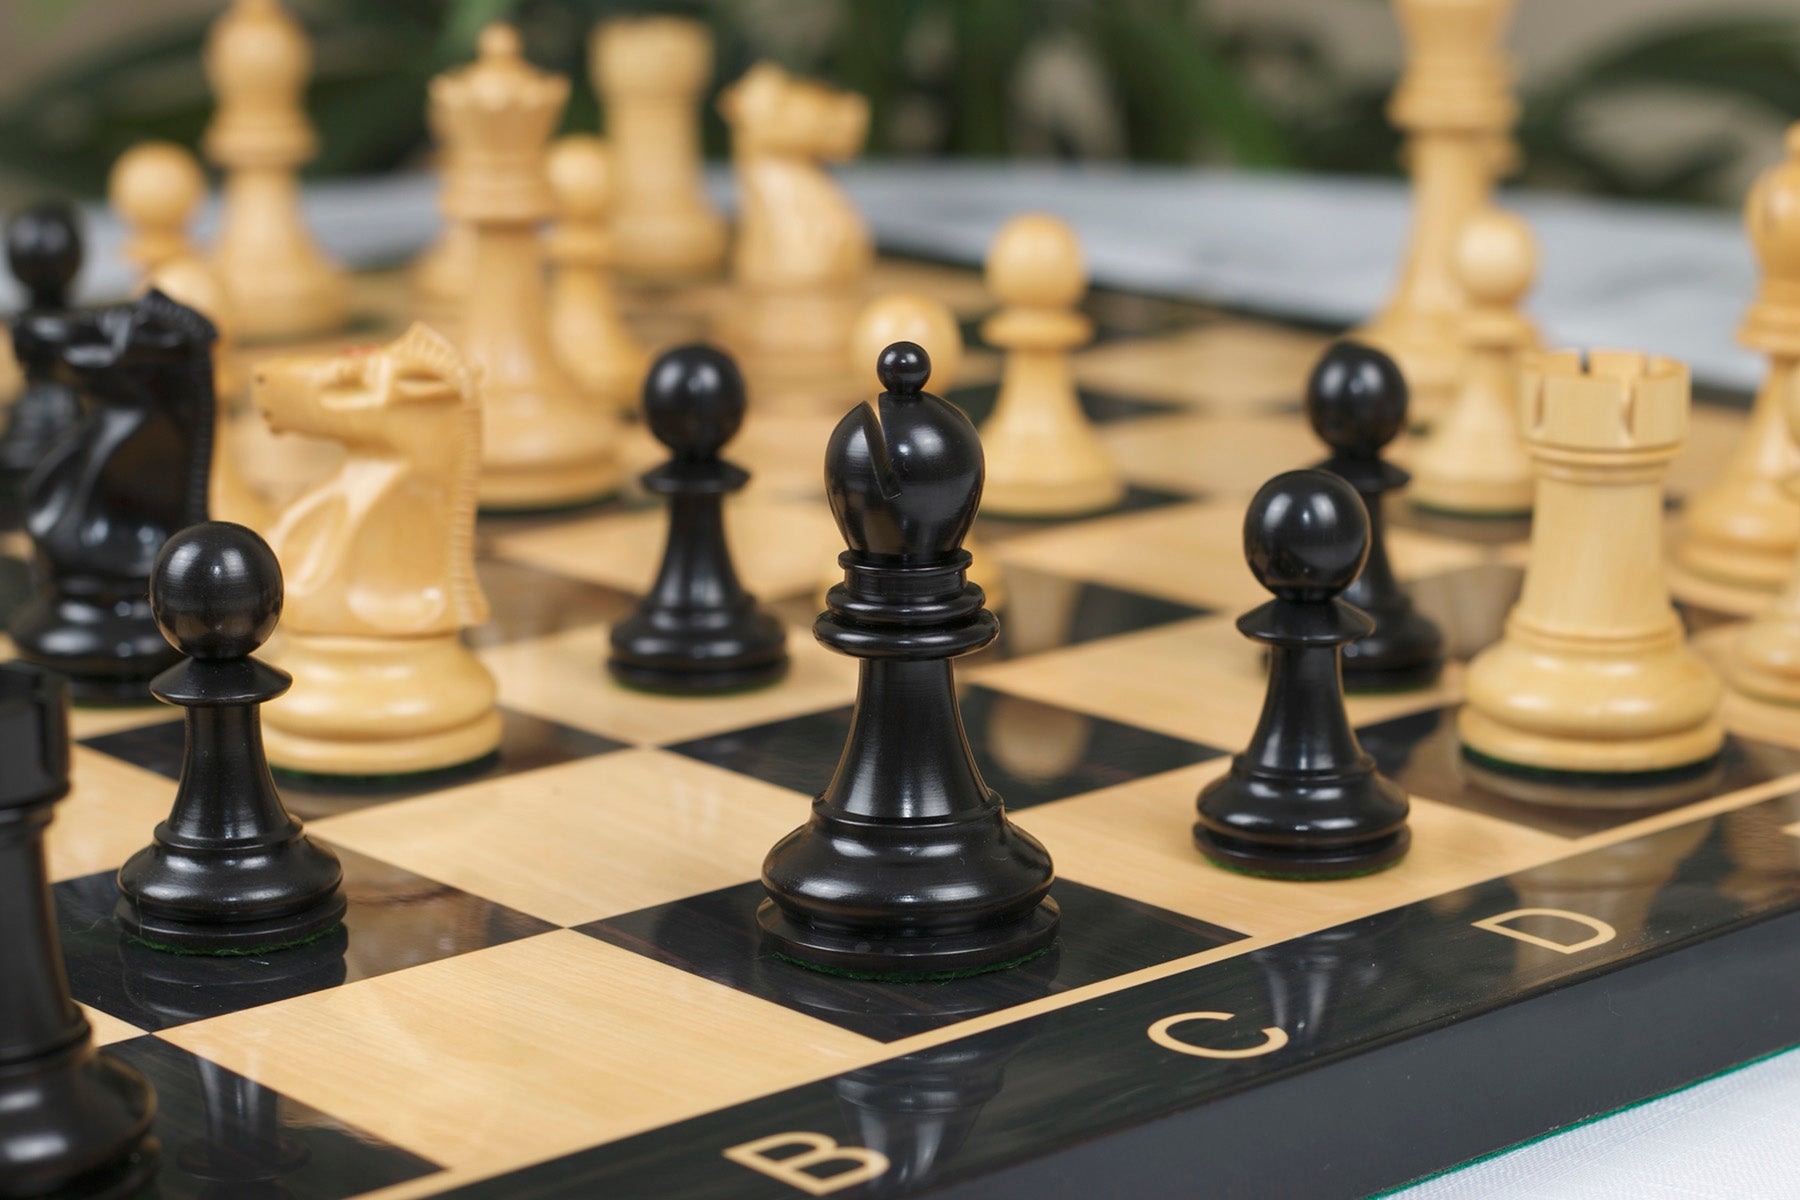 Kingpin Chess Magazine » Spassky's Toughest Simul